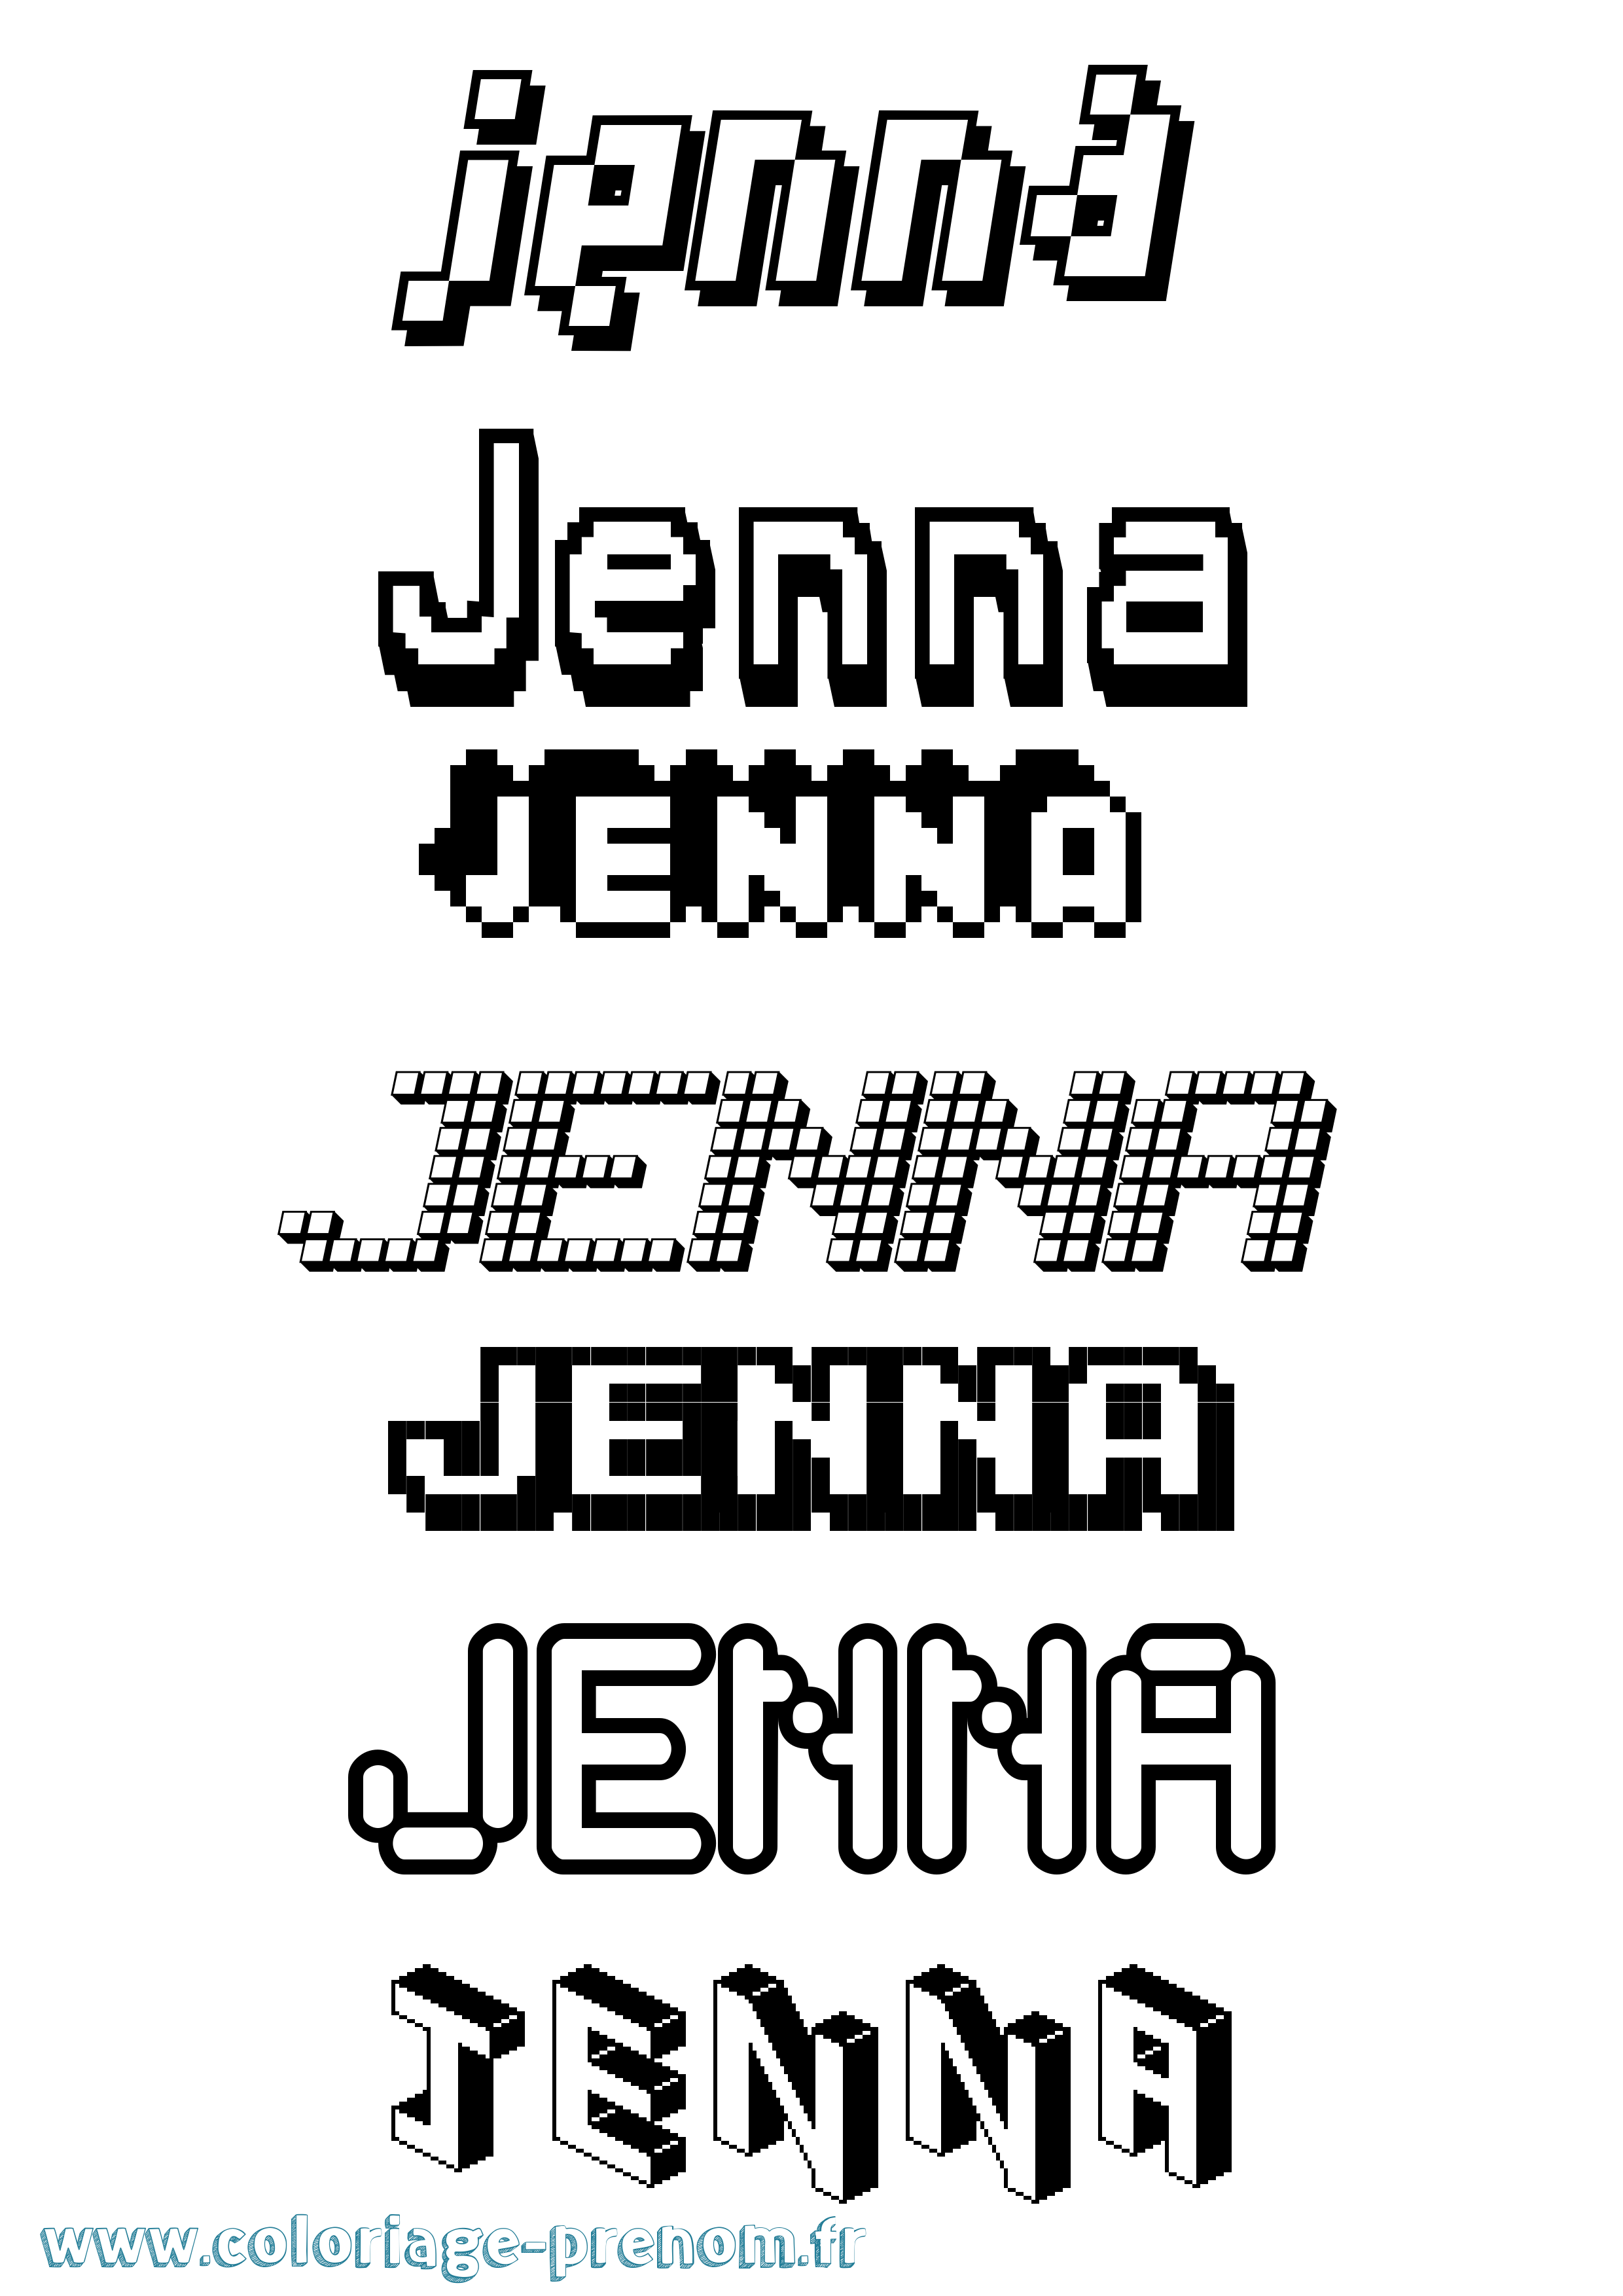 Coloriage prénom Jenna Pixel